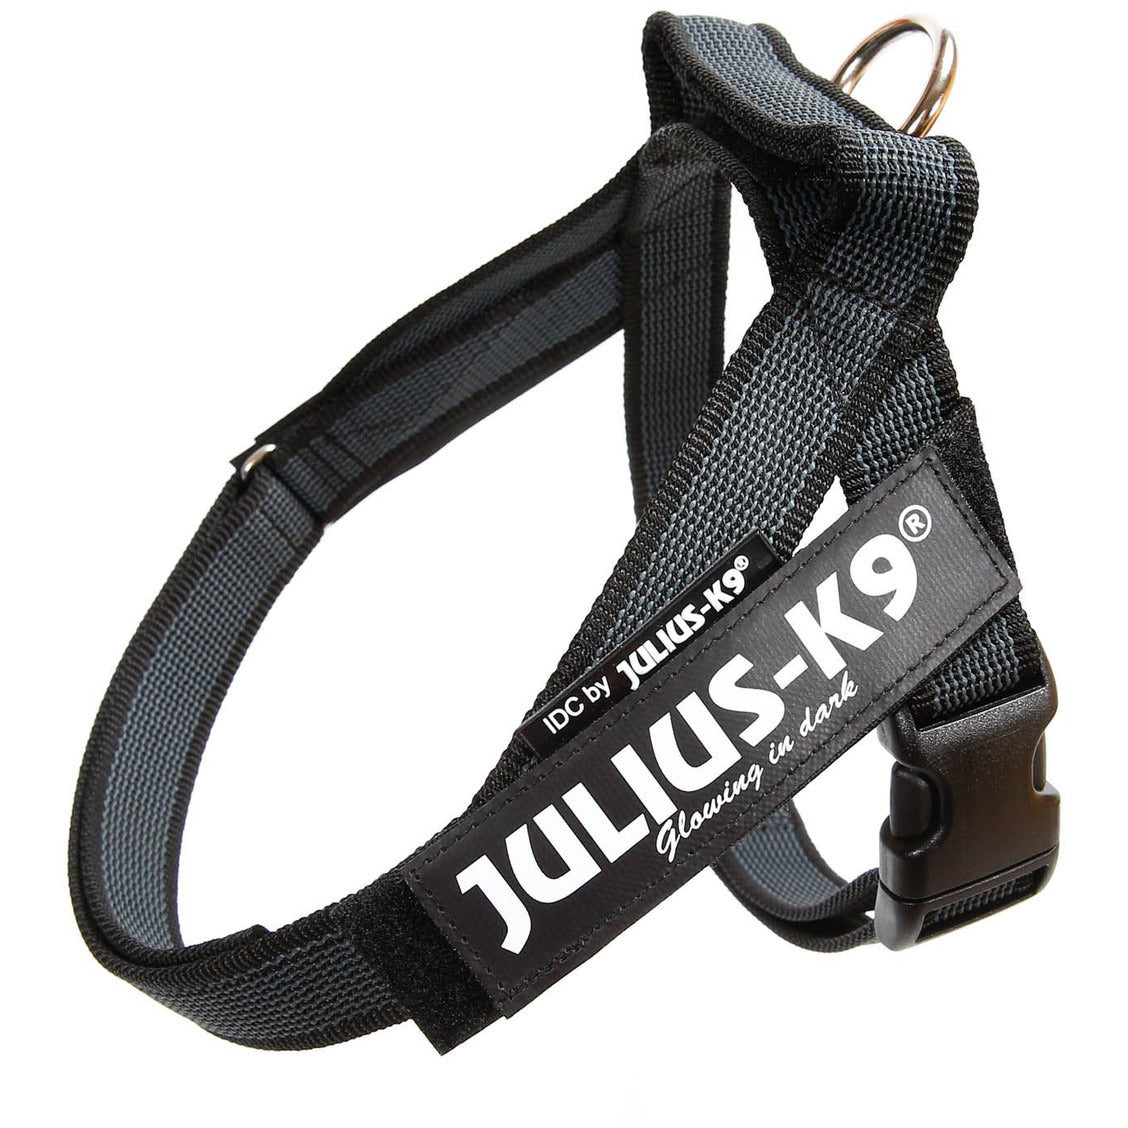 JULIUS K9 IDC Belt Harness Black - NEW GENERATION – CANIS CALLIDUS